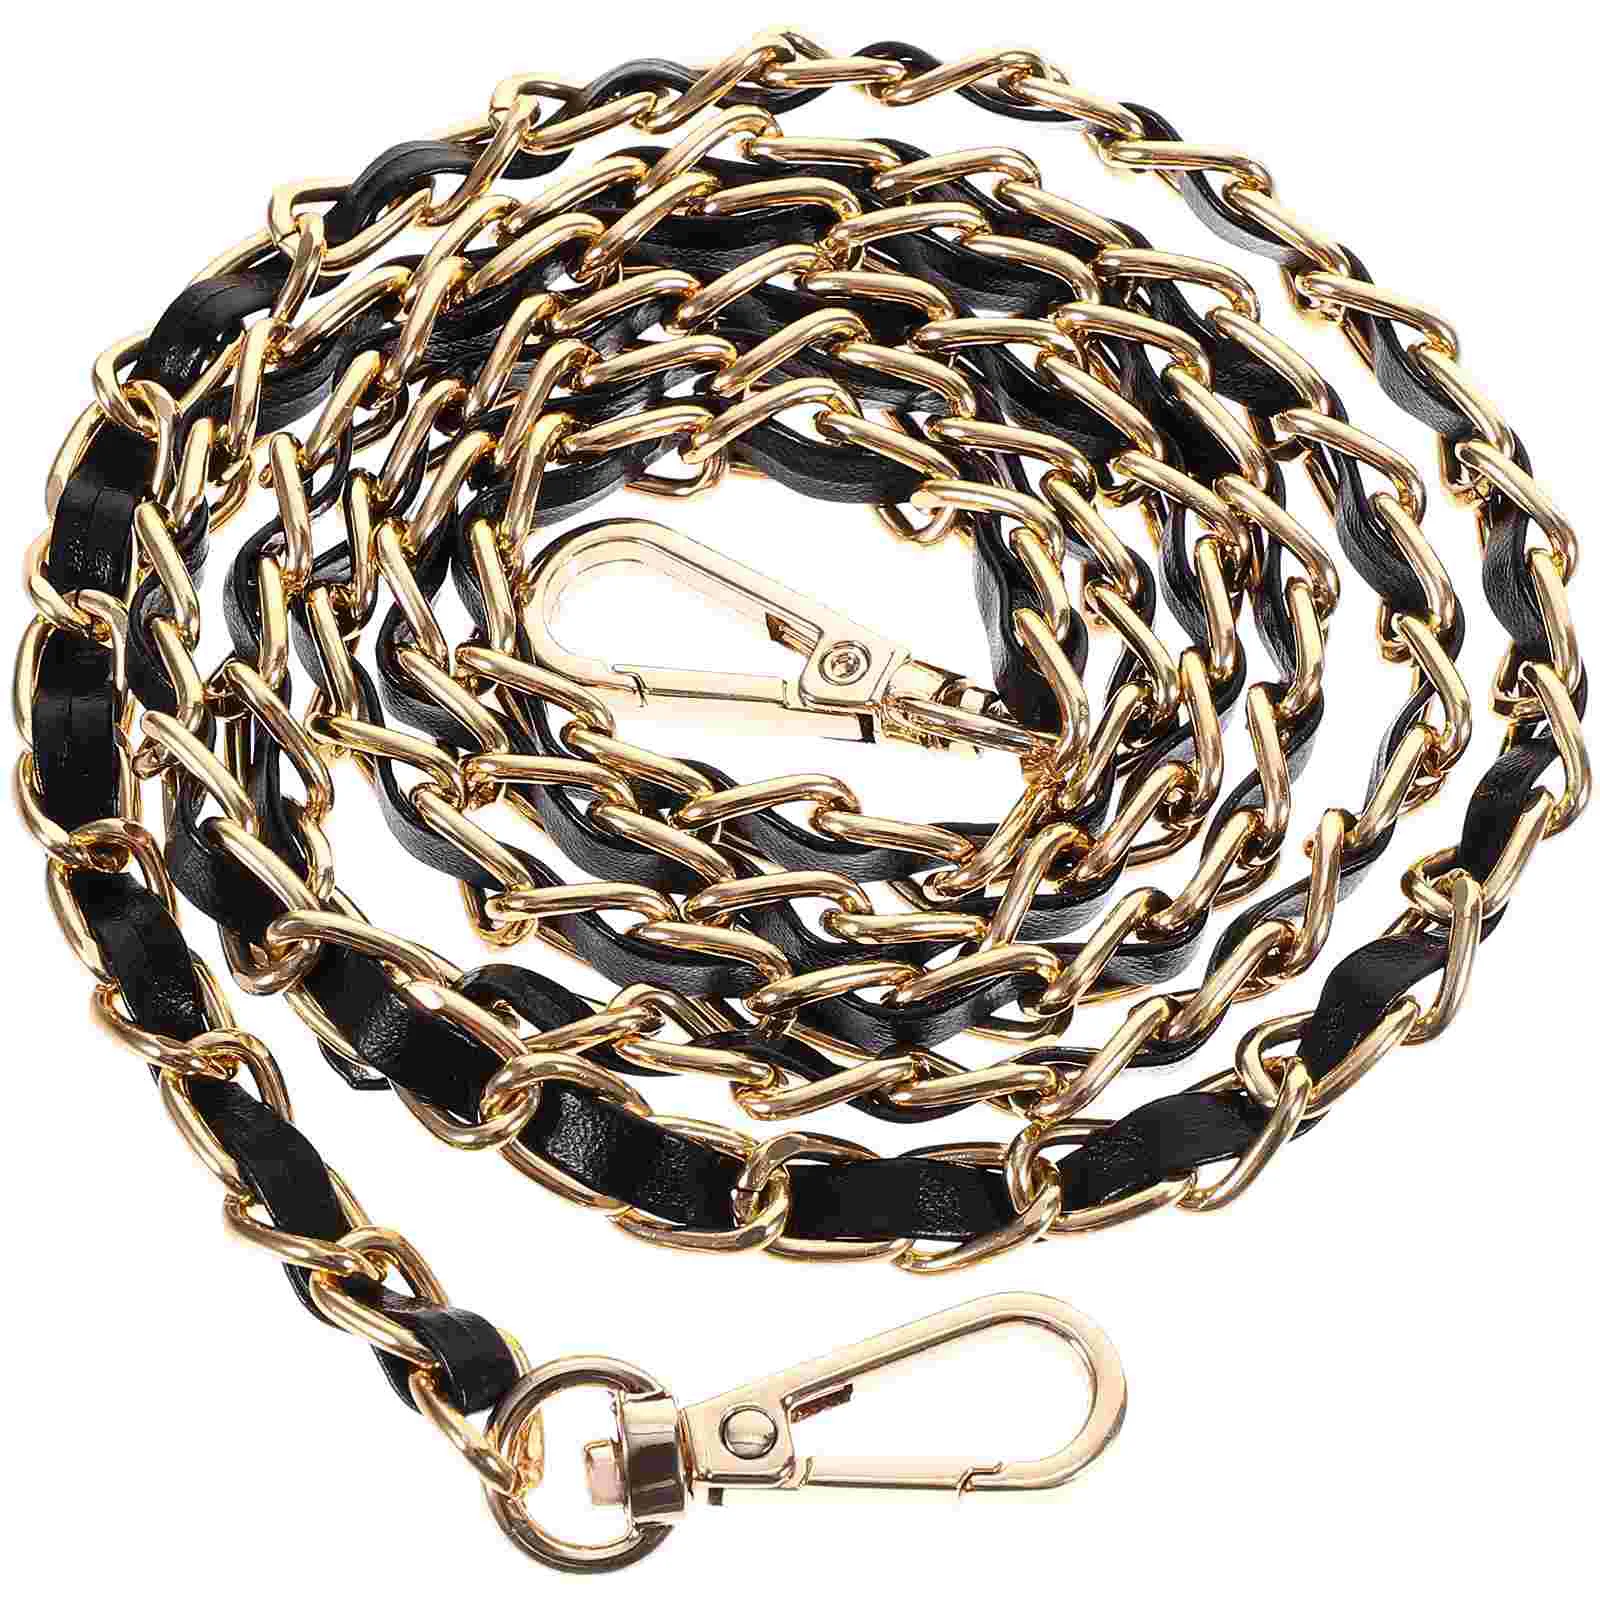 120cm Handbag Metal Chains Purse Chain with Buckles Shoulder Bags Straps Handbag Handles Bag Accessories (Gold)